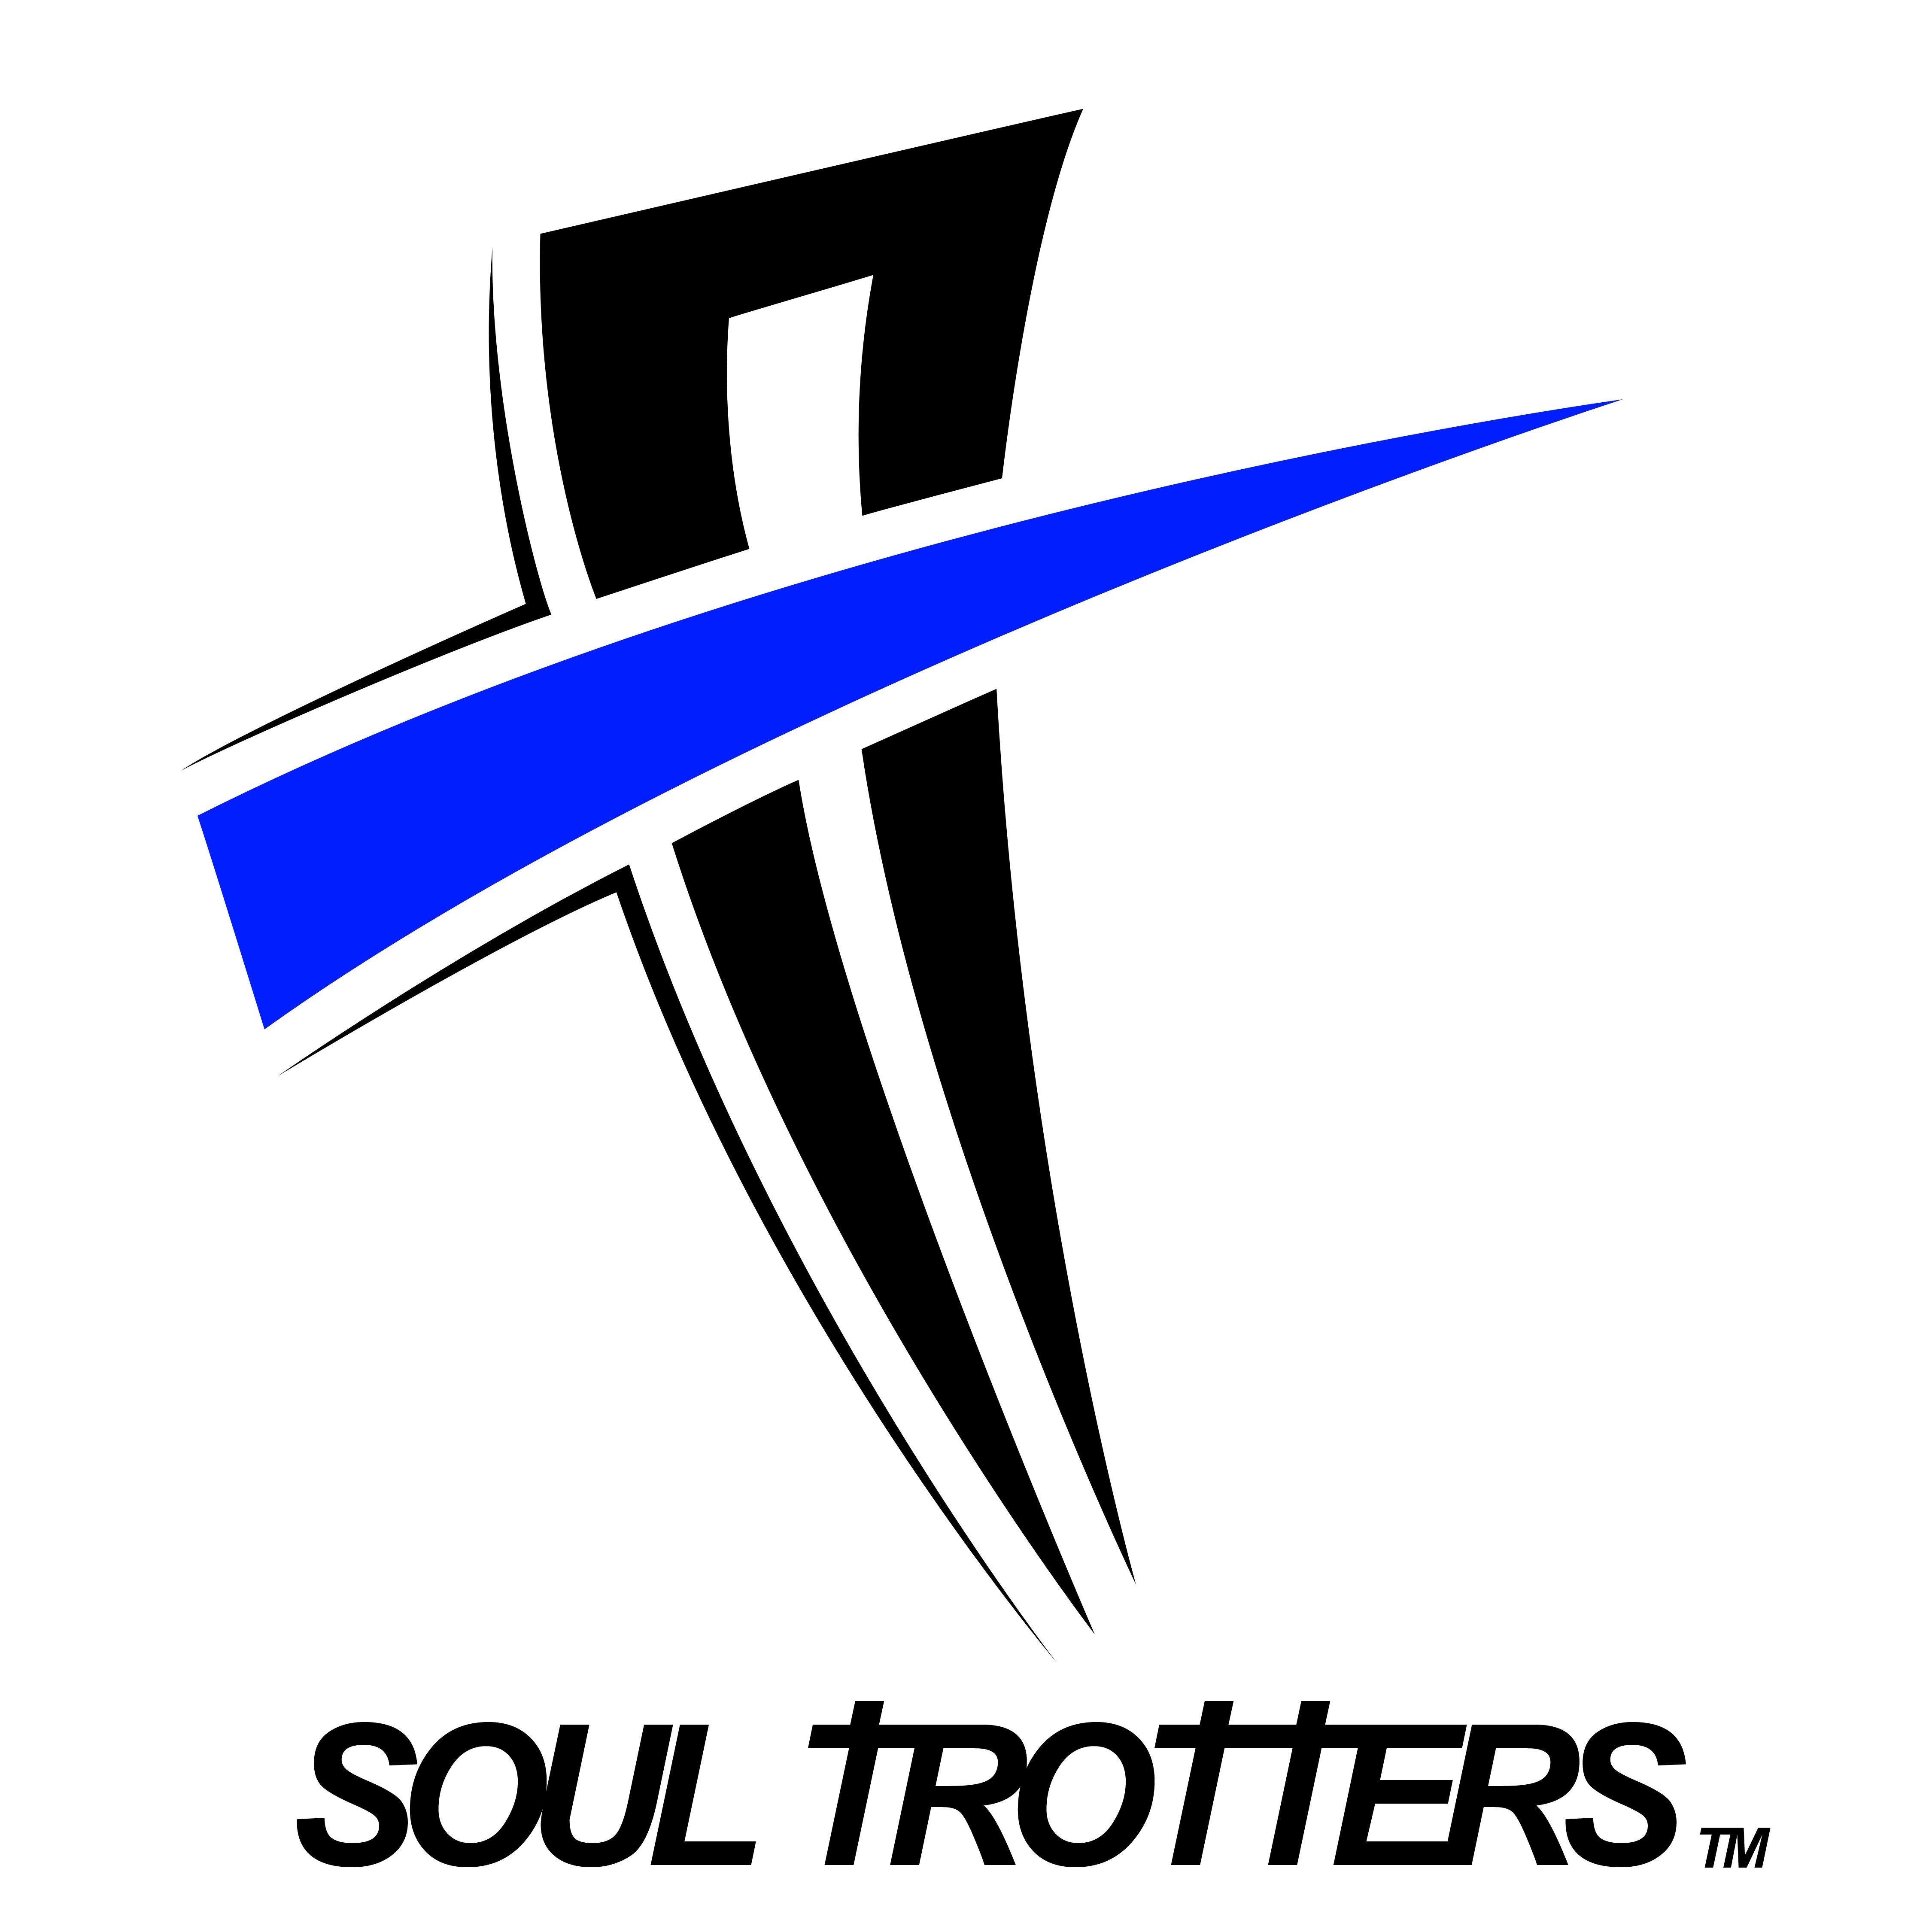 Trotters Logo - Soul Trotters